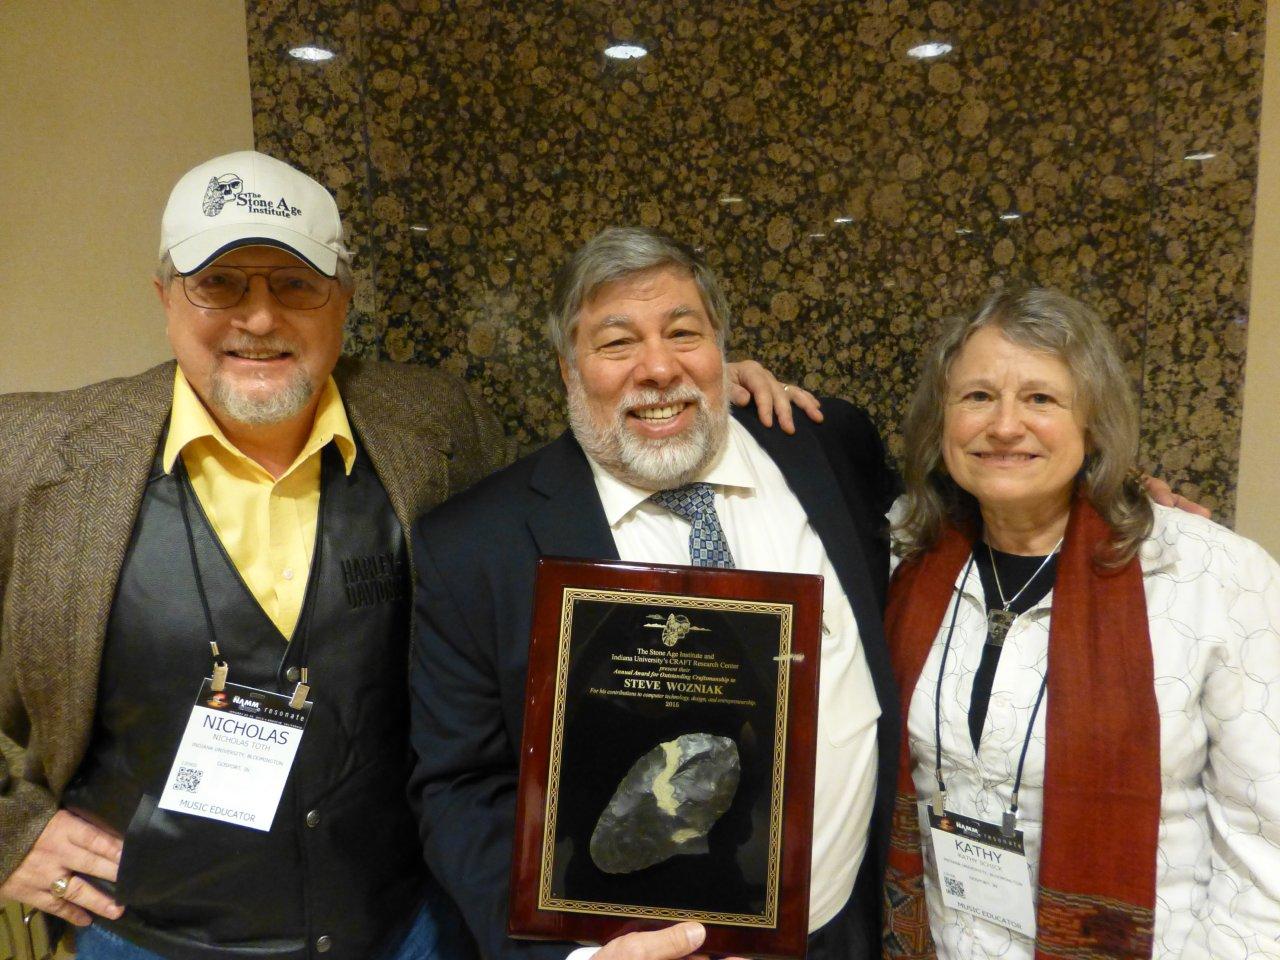 Nick Toth, Steve Wozniak, and Kathy Schick